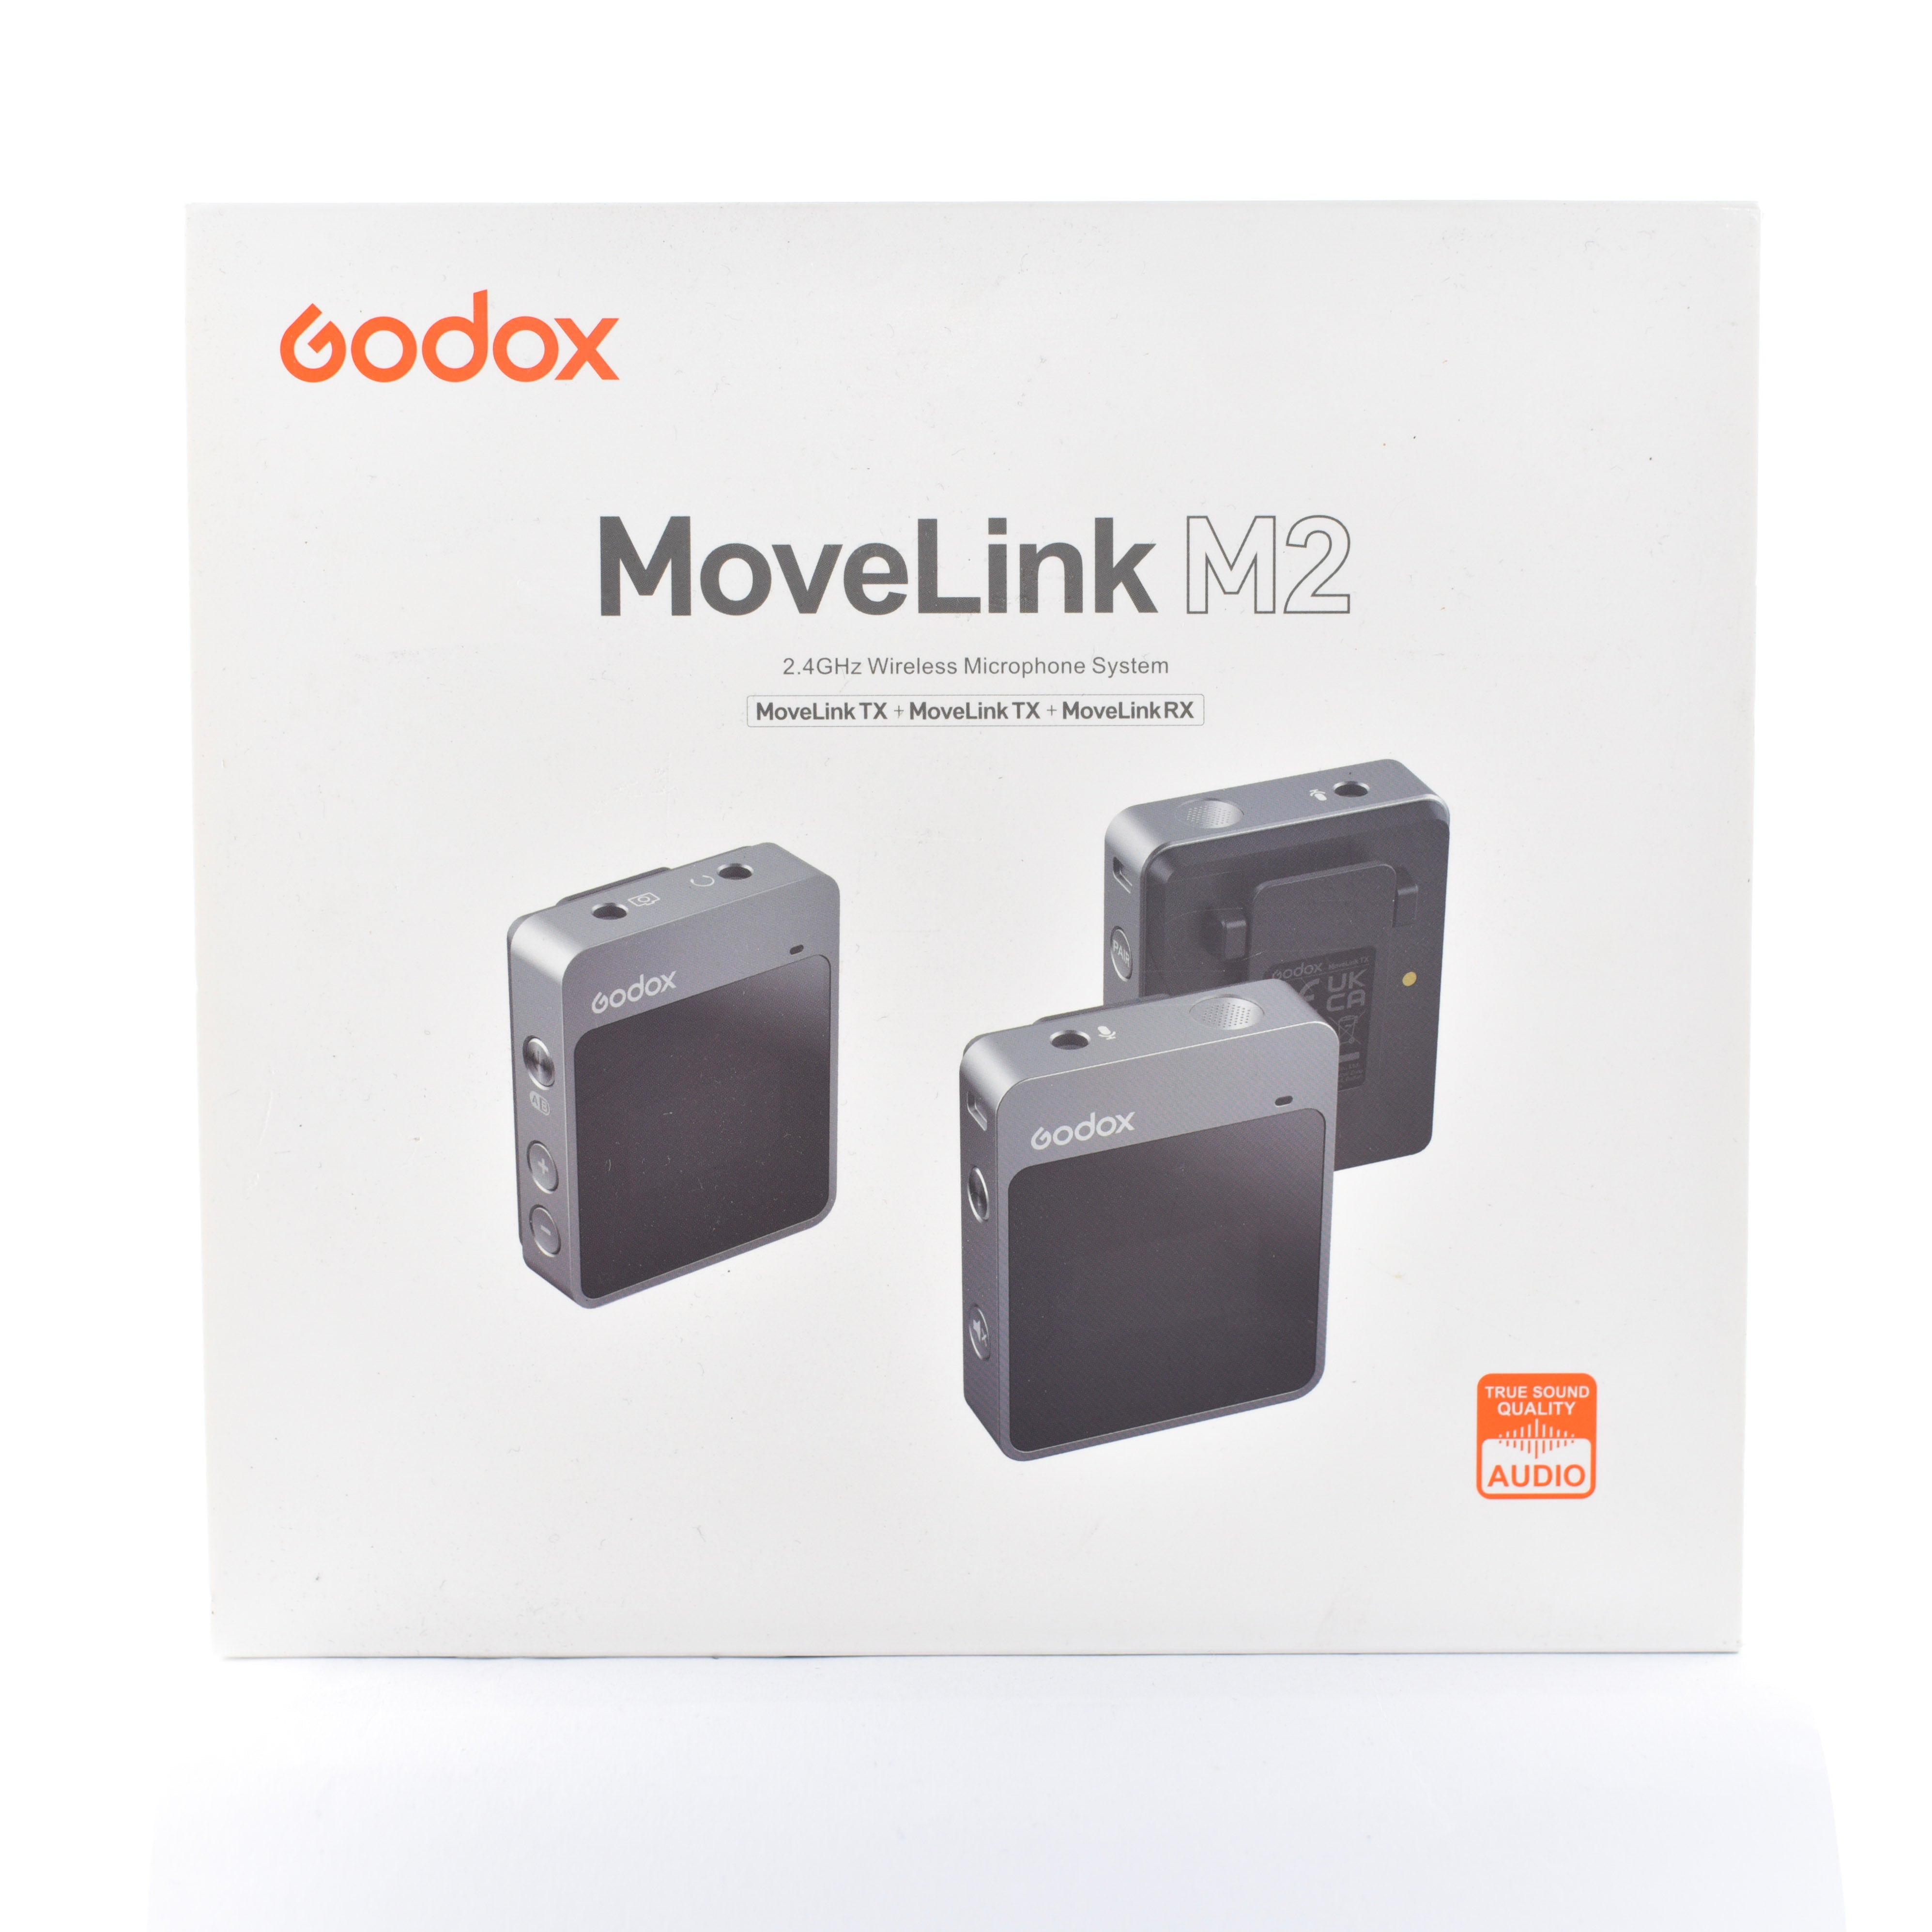 Godox Movelink M2 Digital Wireless Smartphone Microphone